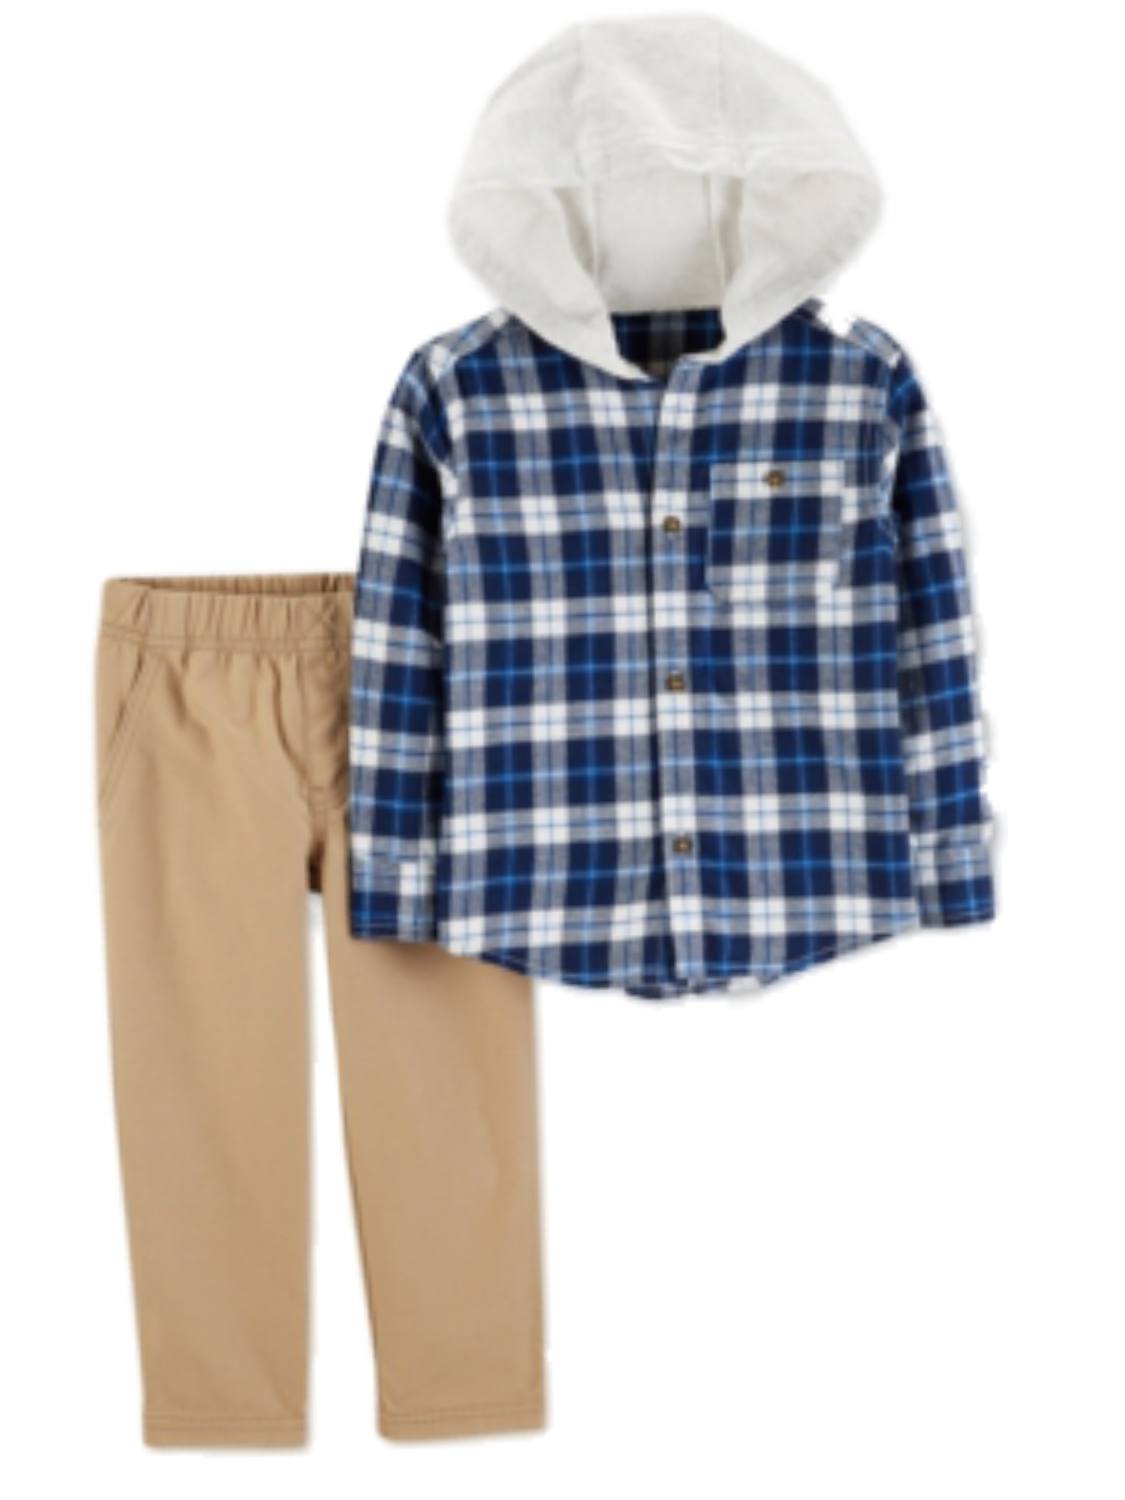 Carter's Carters Infant Boys Long Sleeve Hooded Outfit Khakis & Blue Plaid Hood Shirt